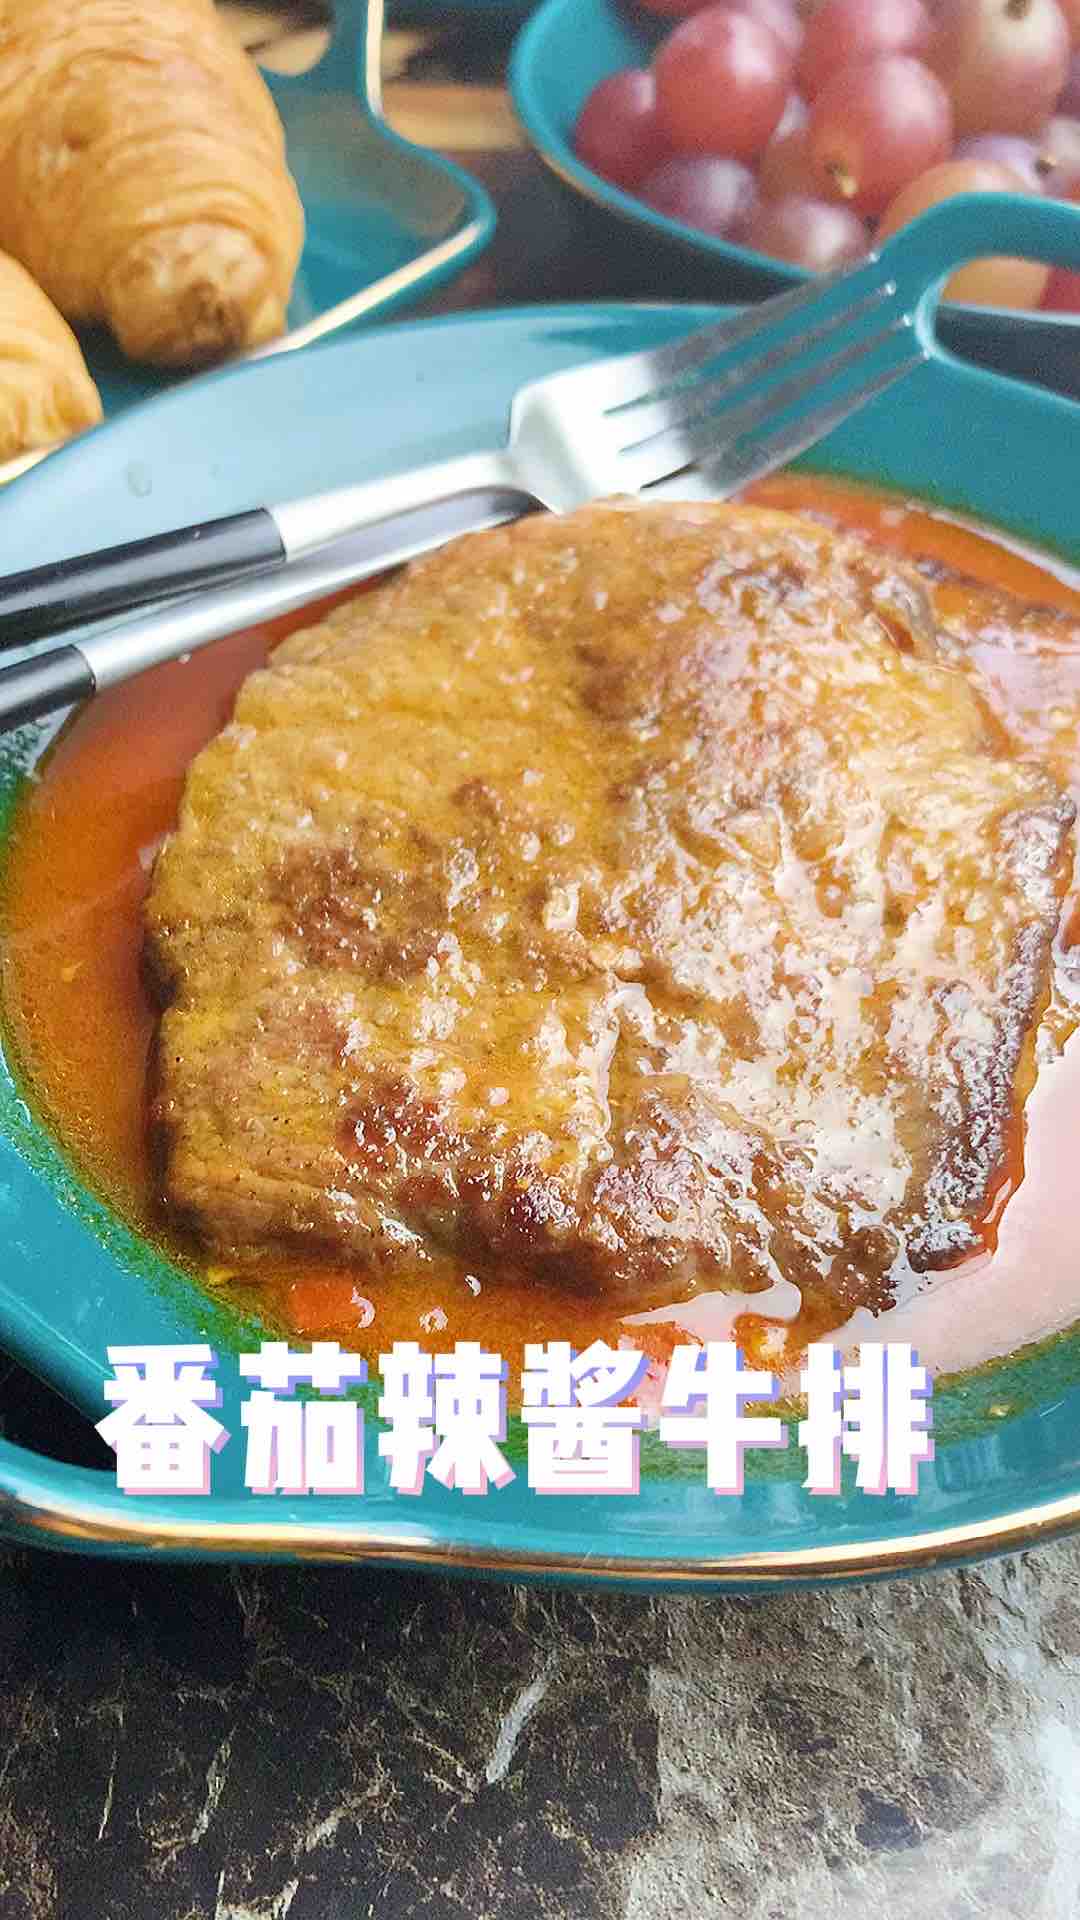 Steak with Tomato Sauce recipe